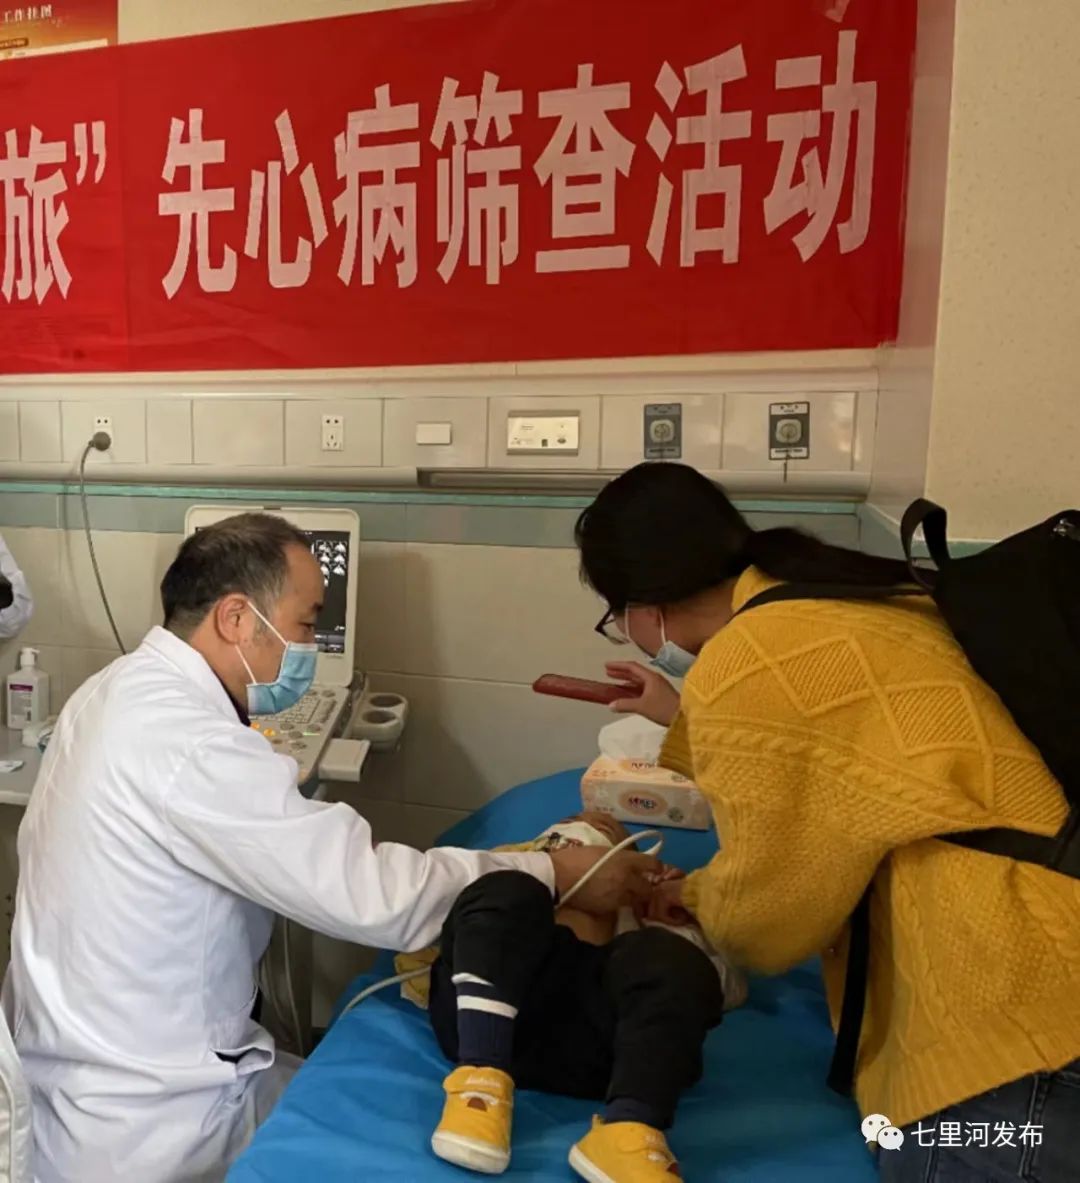 CSI AP 2019 | Live Case：张智伟教授团队成功演示一例挑战性先天性心脏病房间隔缺损介入治疗手术 -- 严道医声网